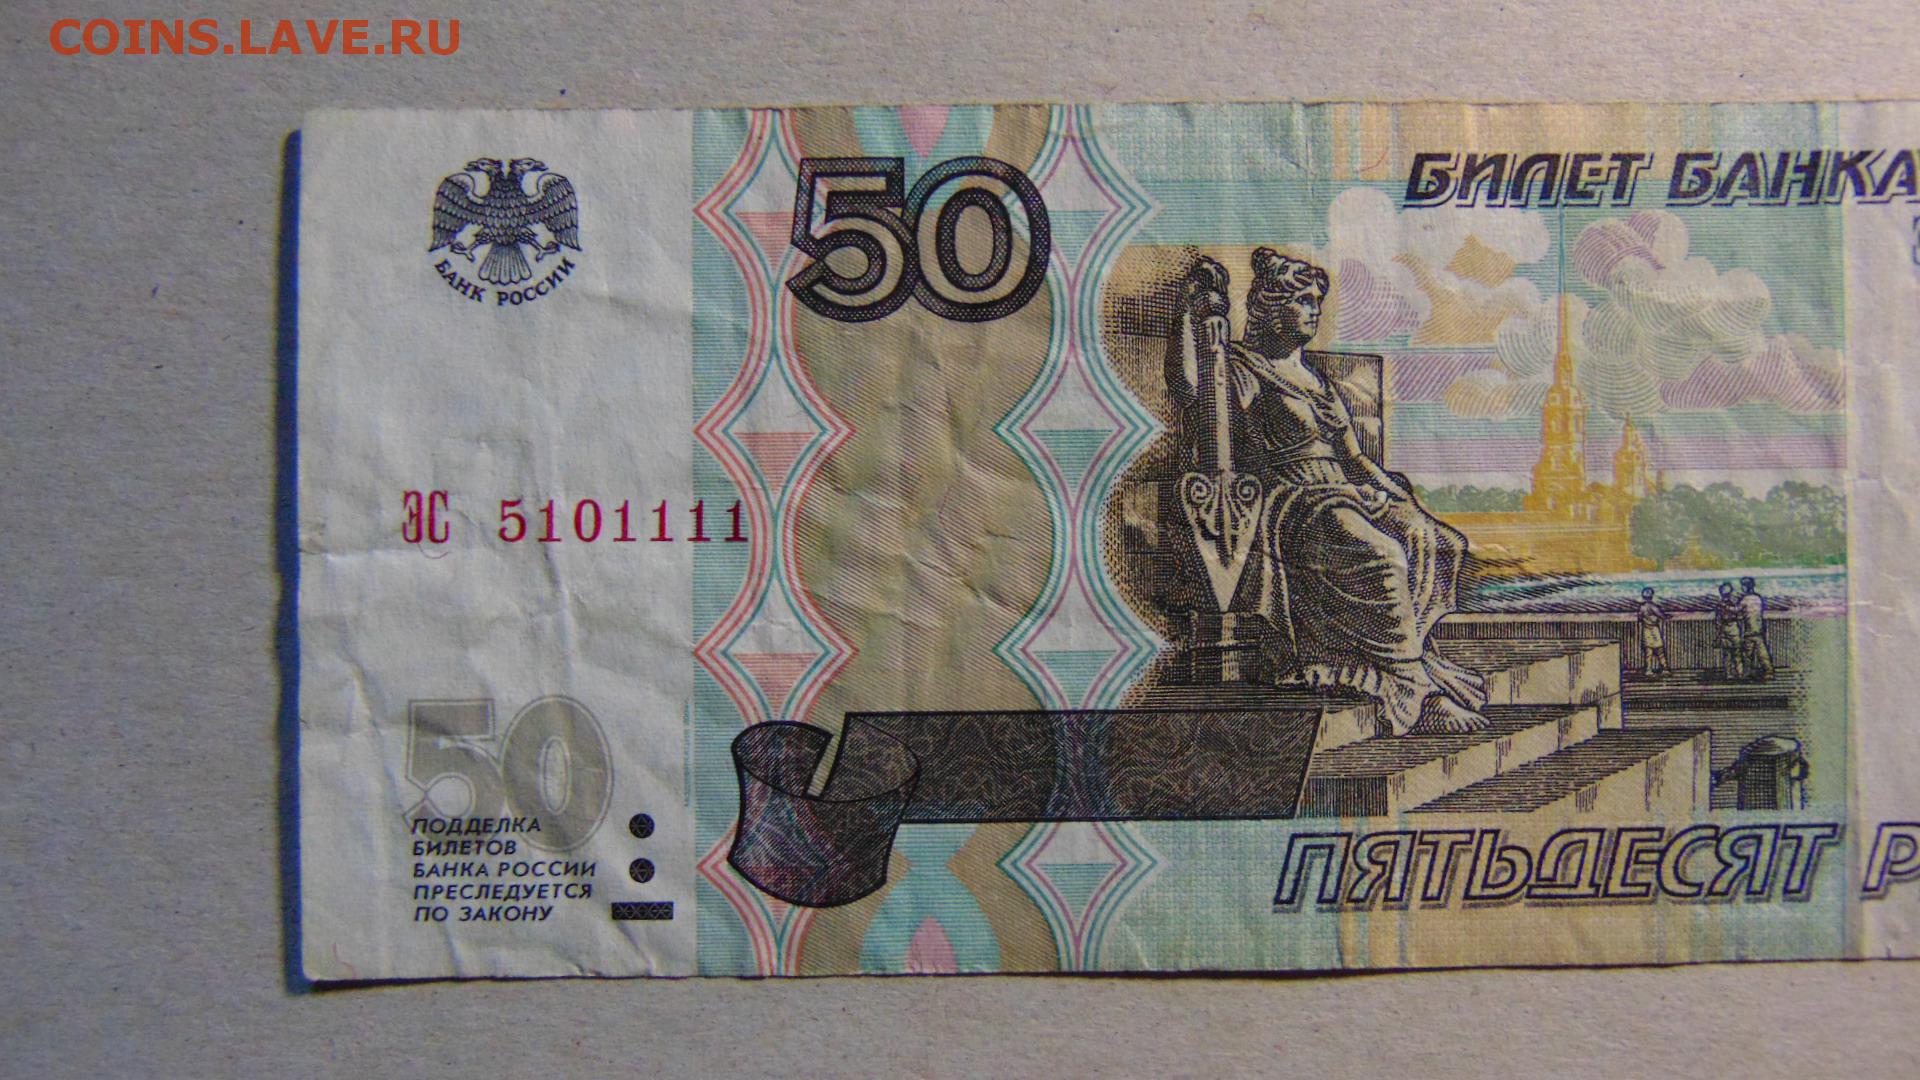 50 рублей 500 рублей. 50 Руб 2004.